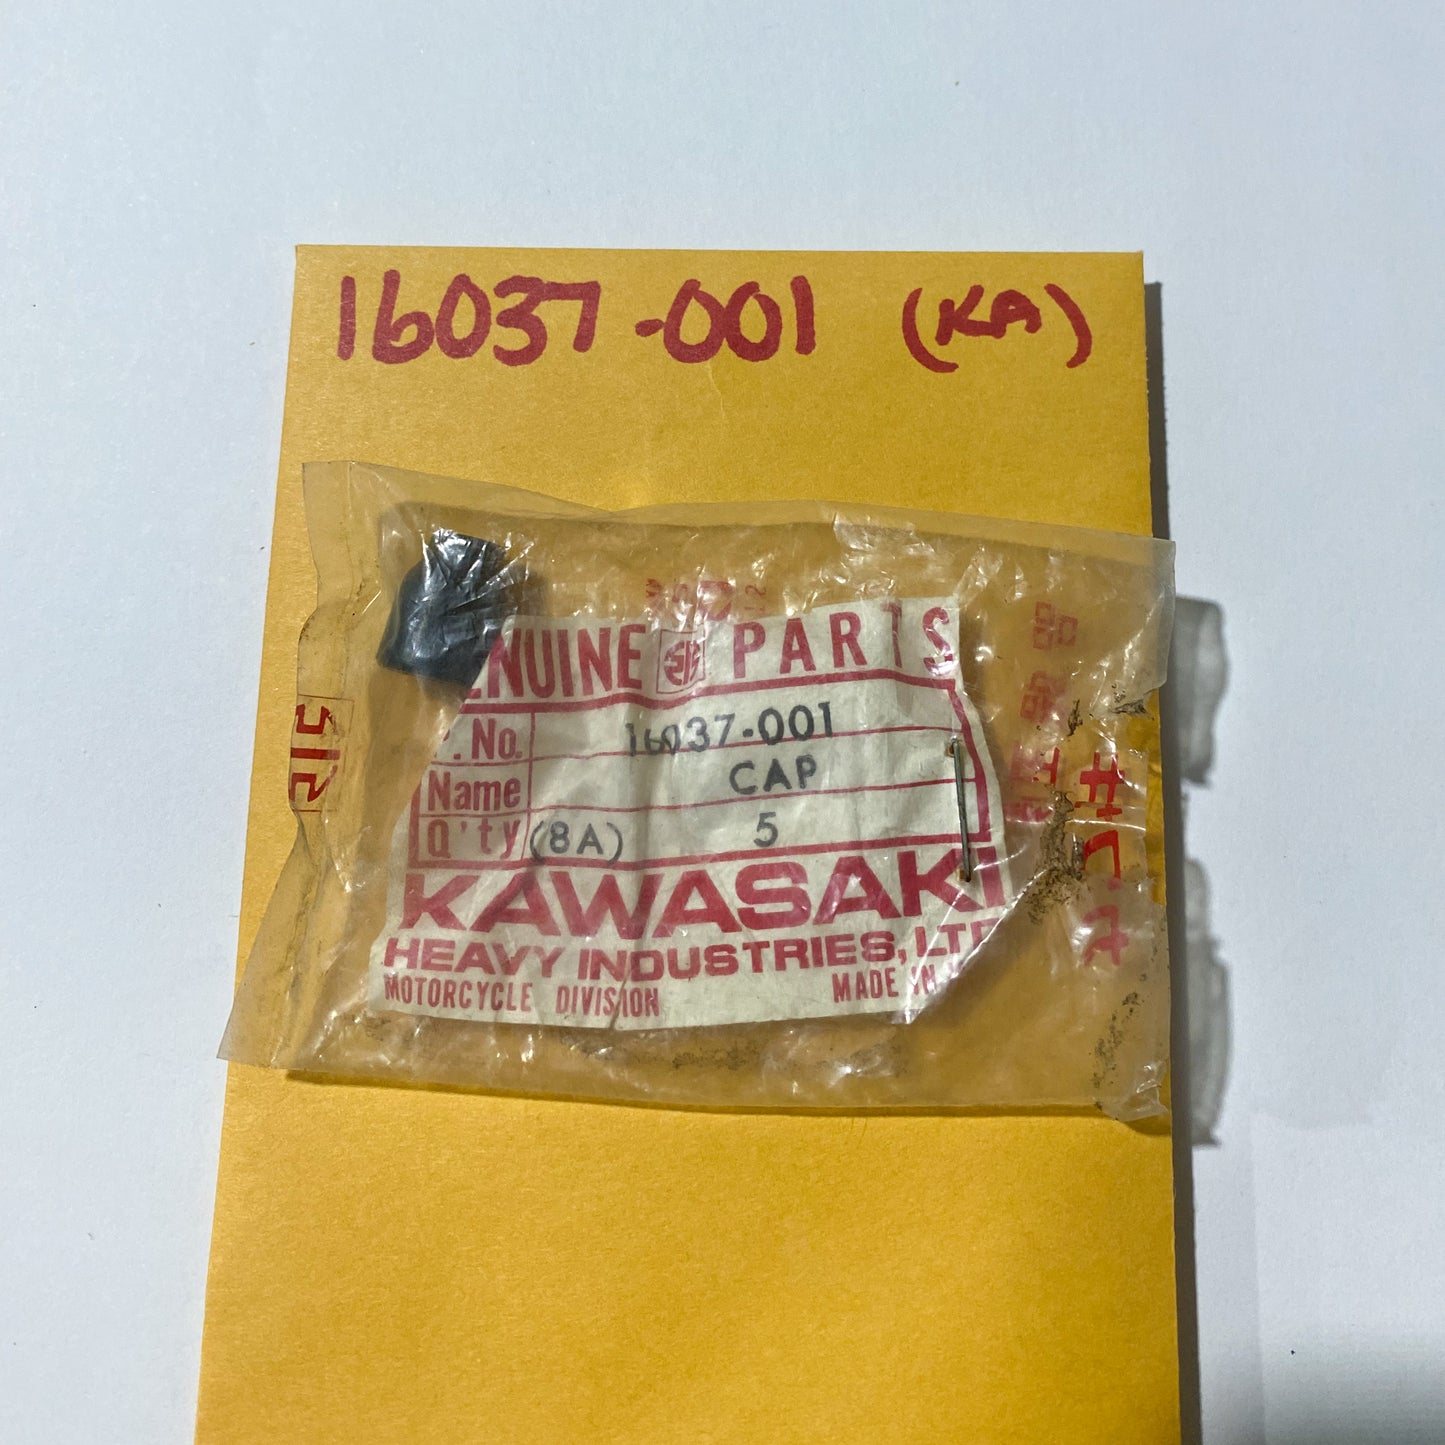 KAWASAKI CAP-RUBBER 16037-001